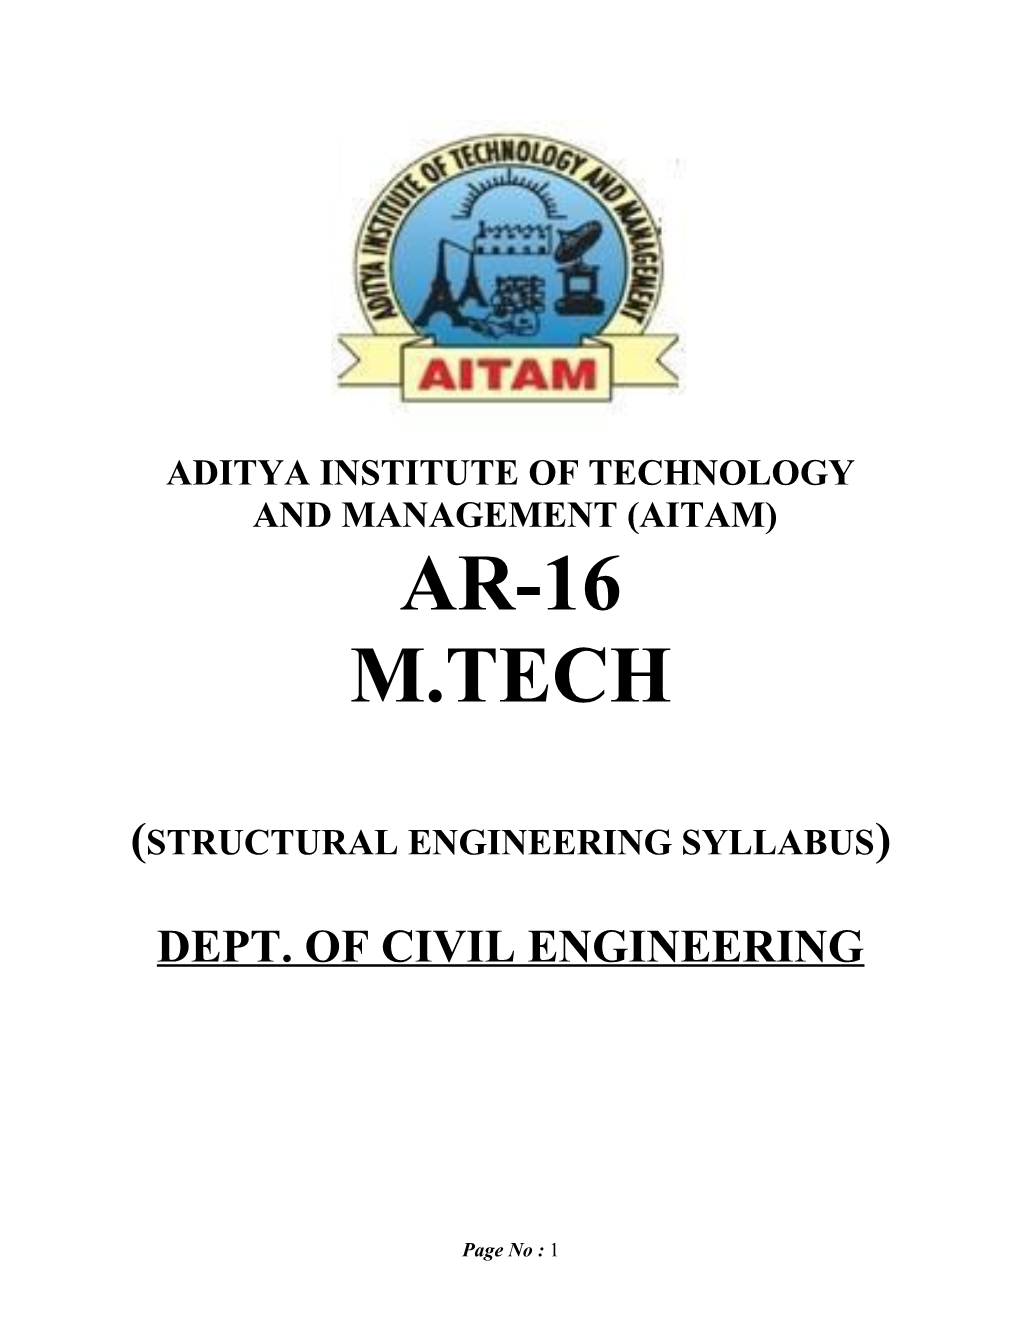 Aditya Institute of Technology